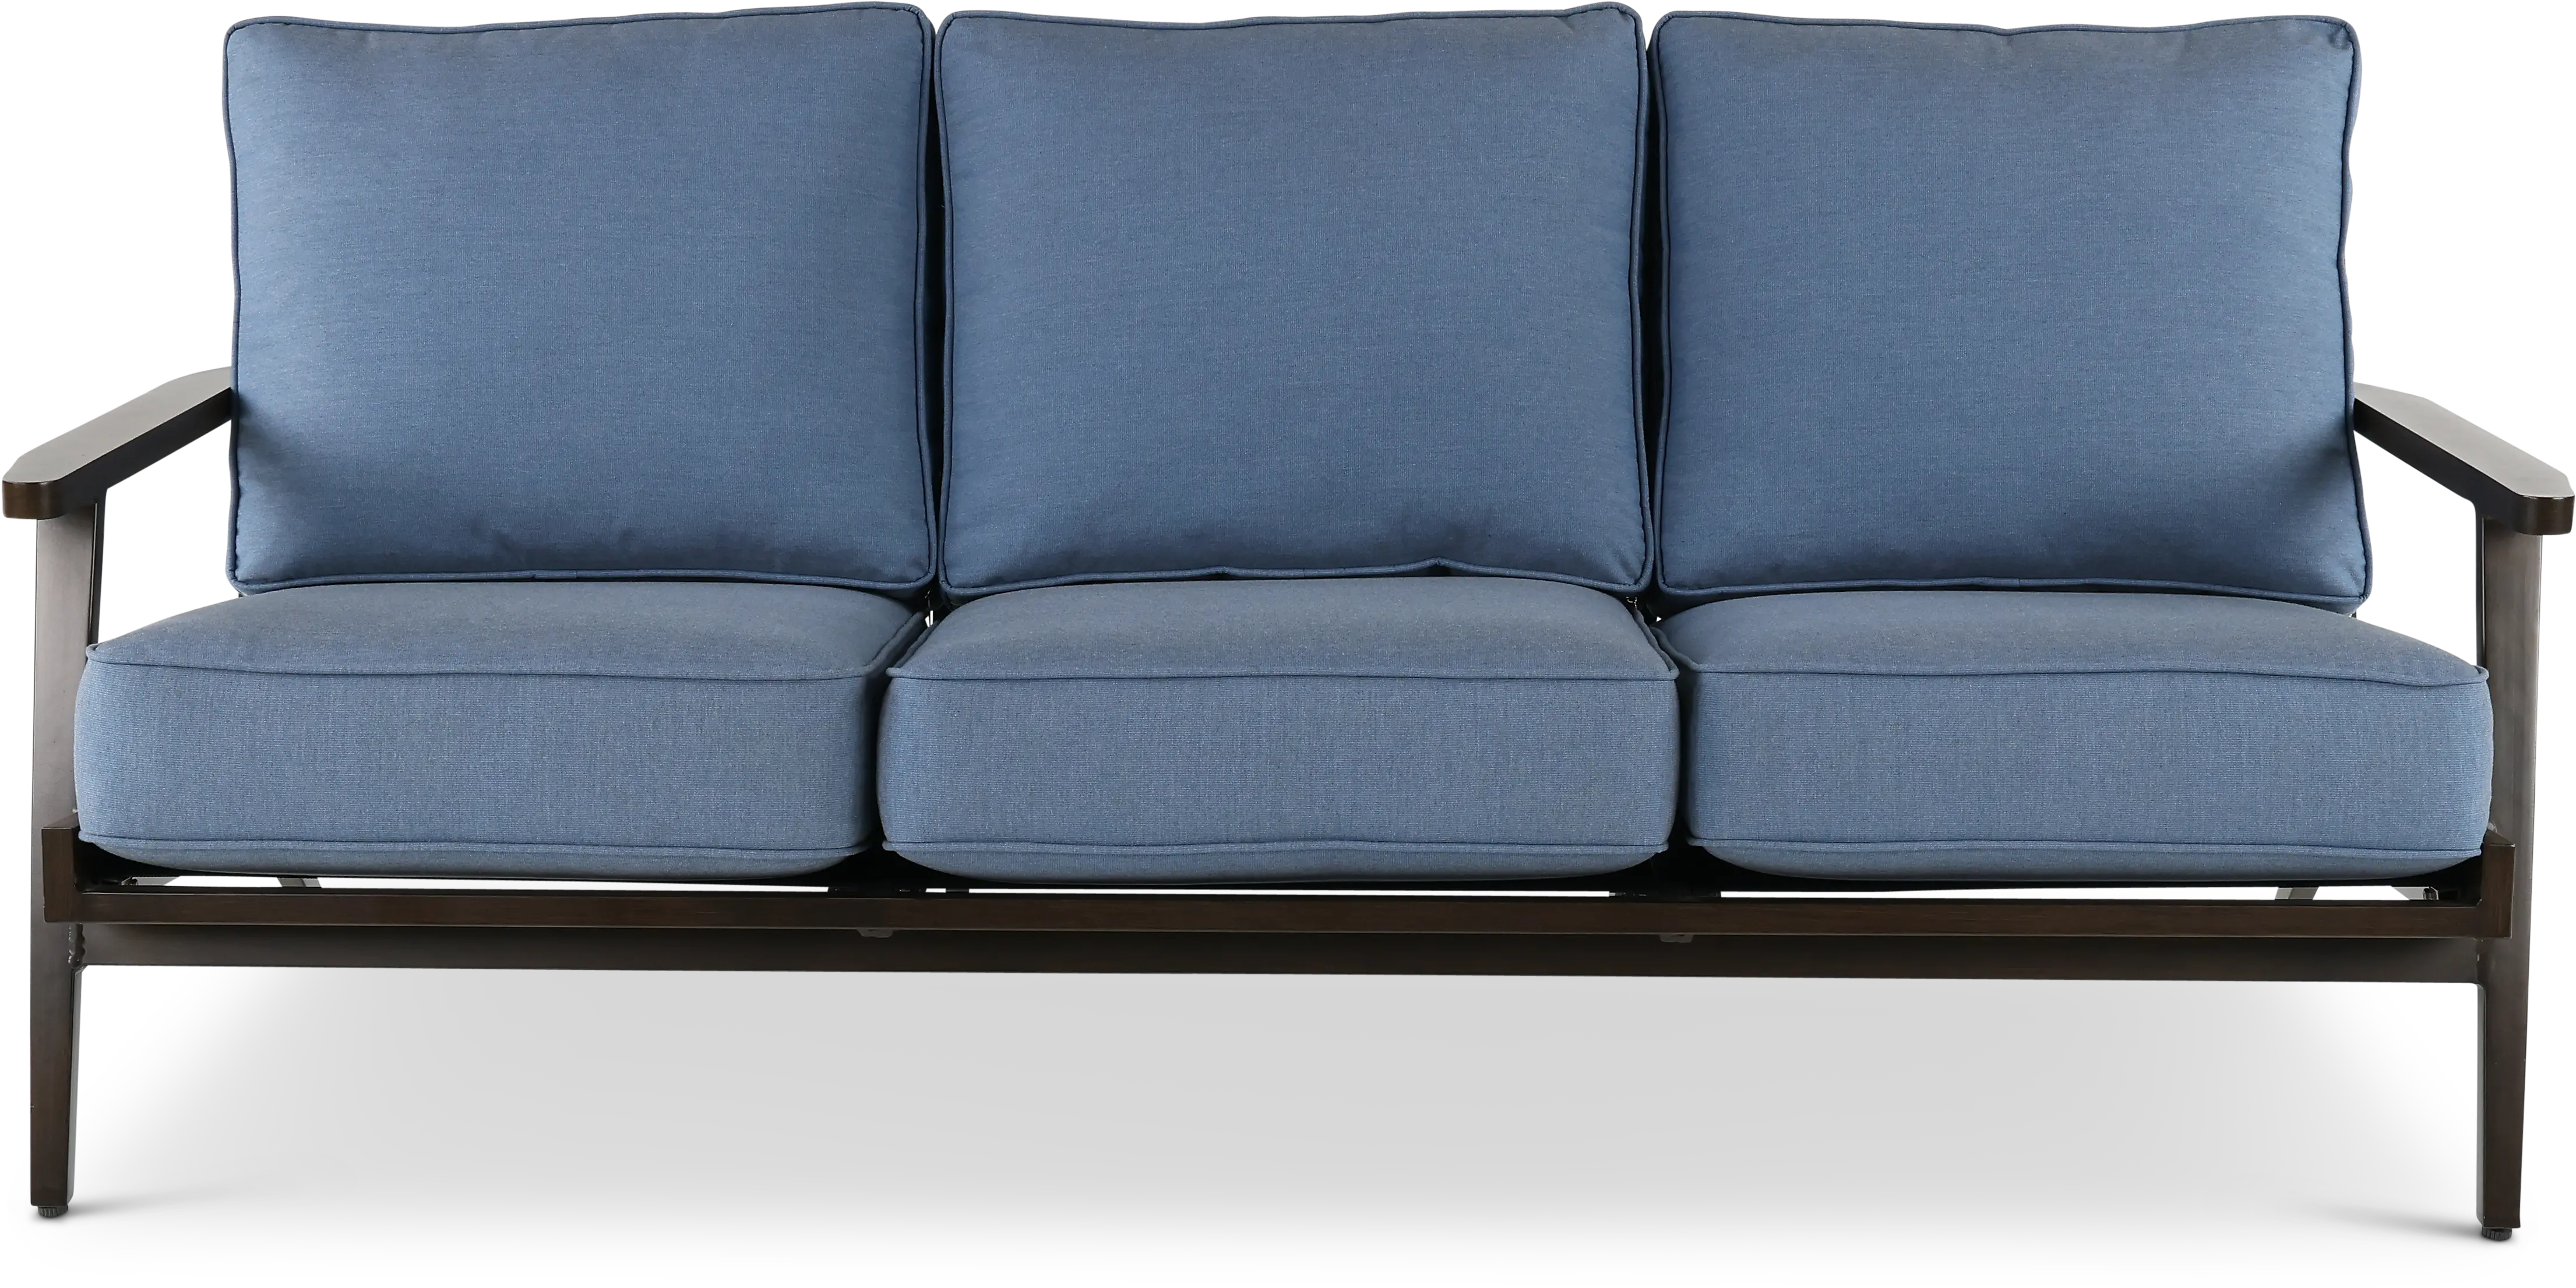 Adeline Denim Blue Patio Sofa